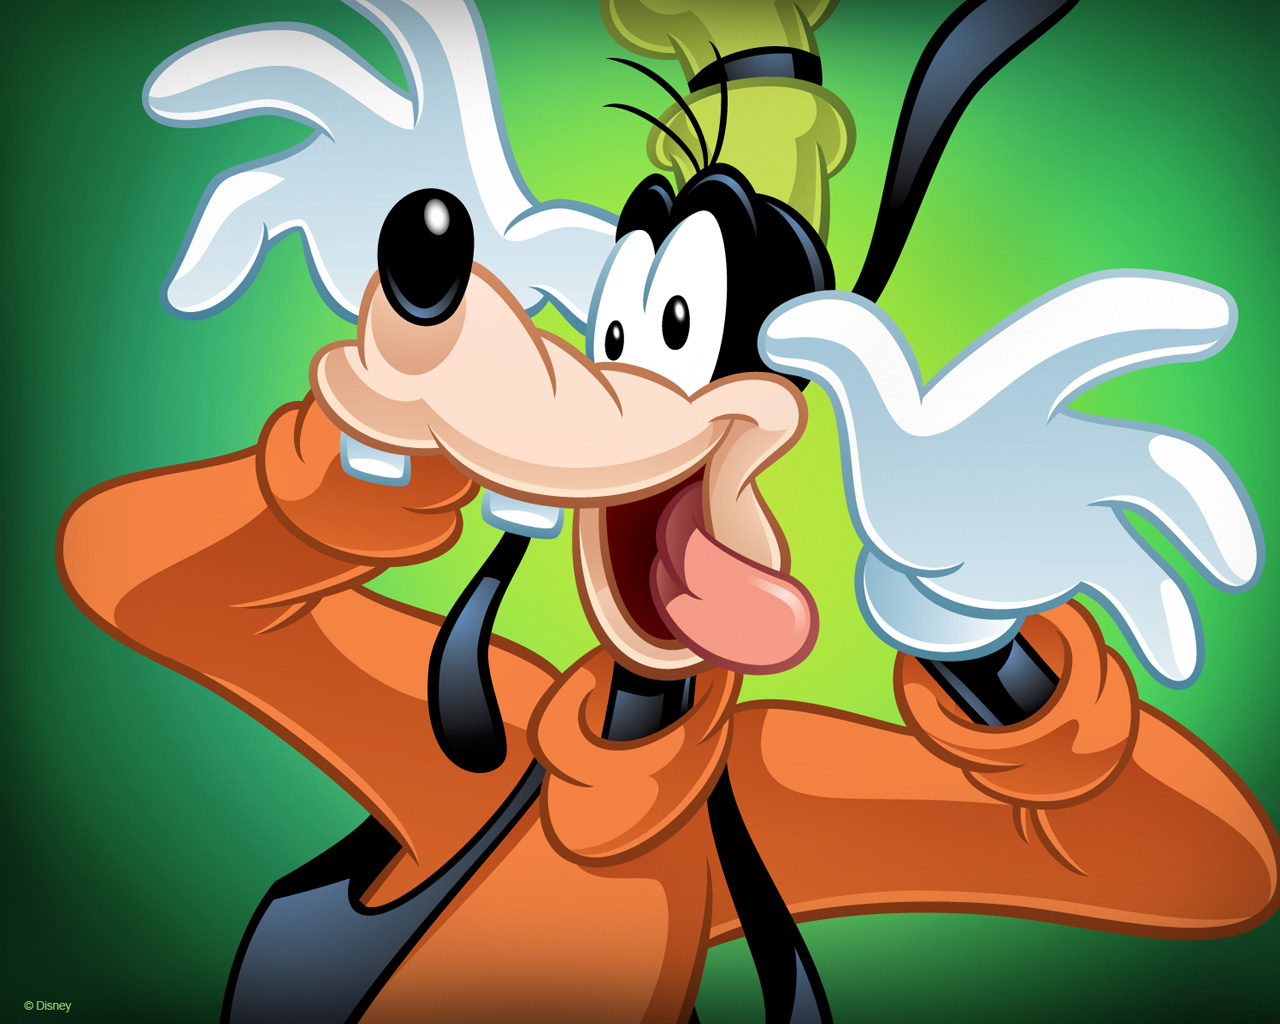 Image - Goofy's Silly Face.jpg - Disney Wiki